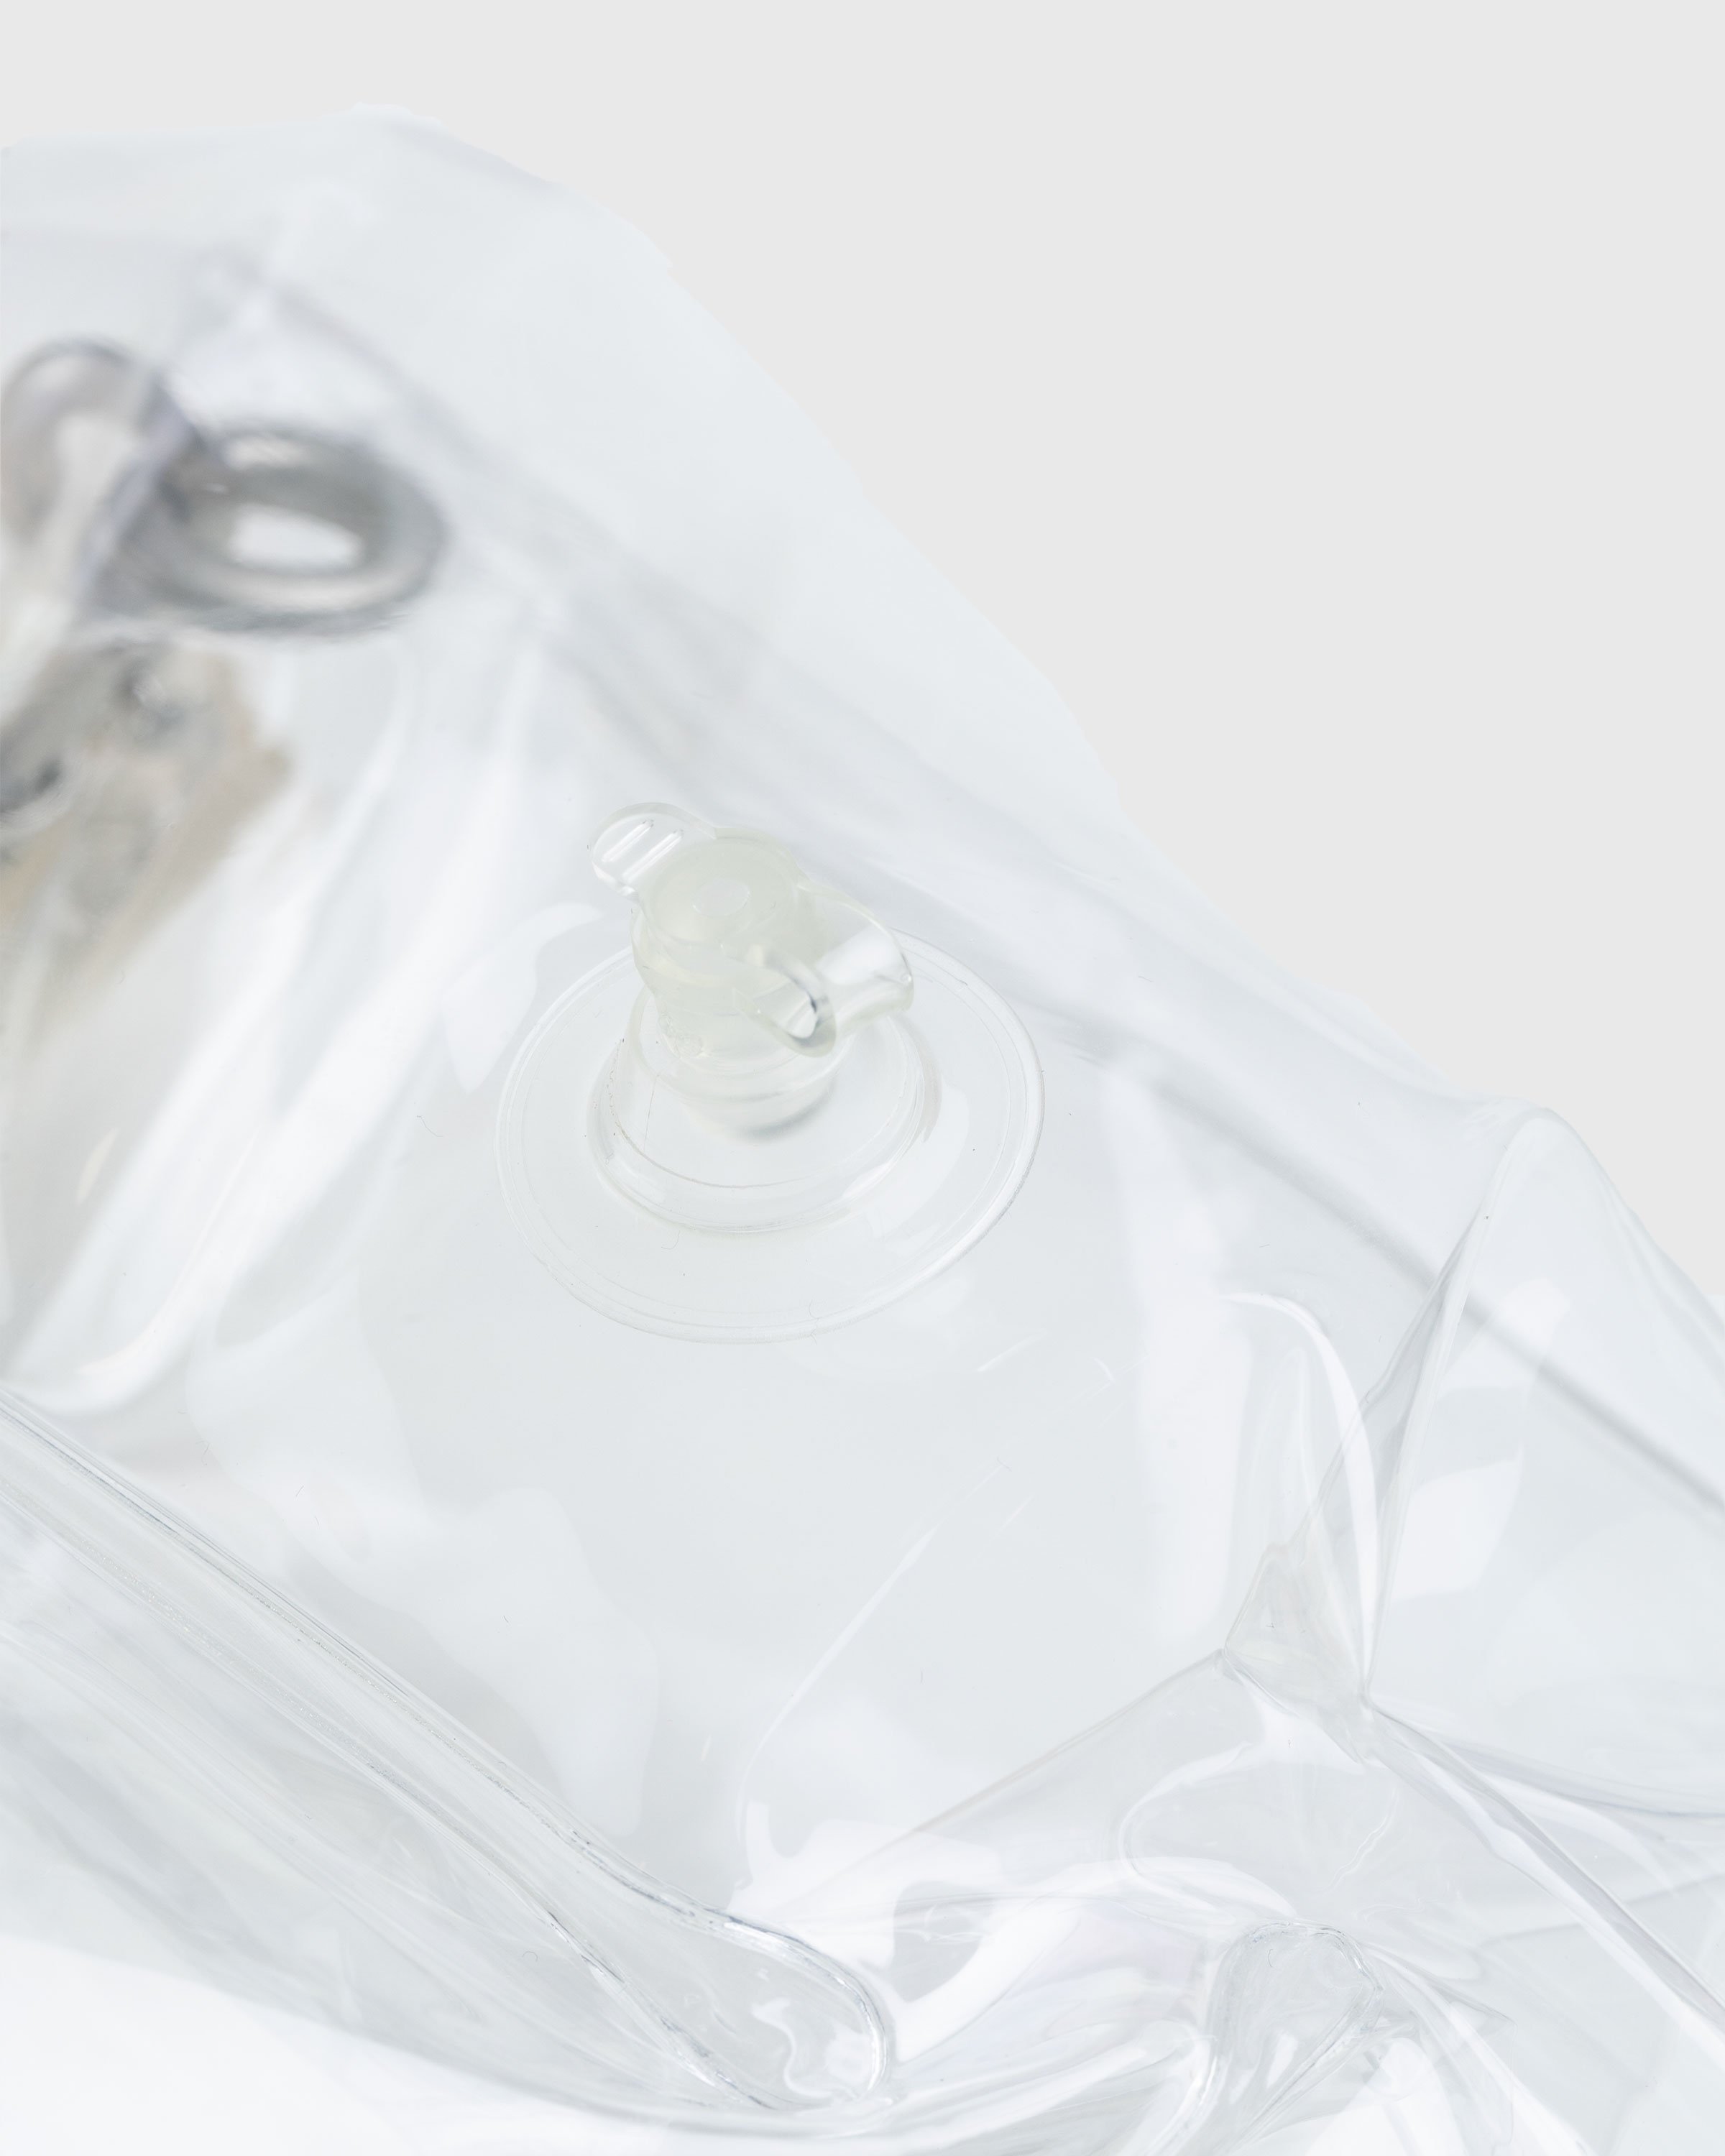 Acne Studios - Inflatable Tote Bag - Accessories - Multi - Image 5